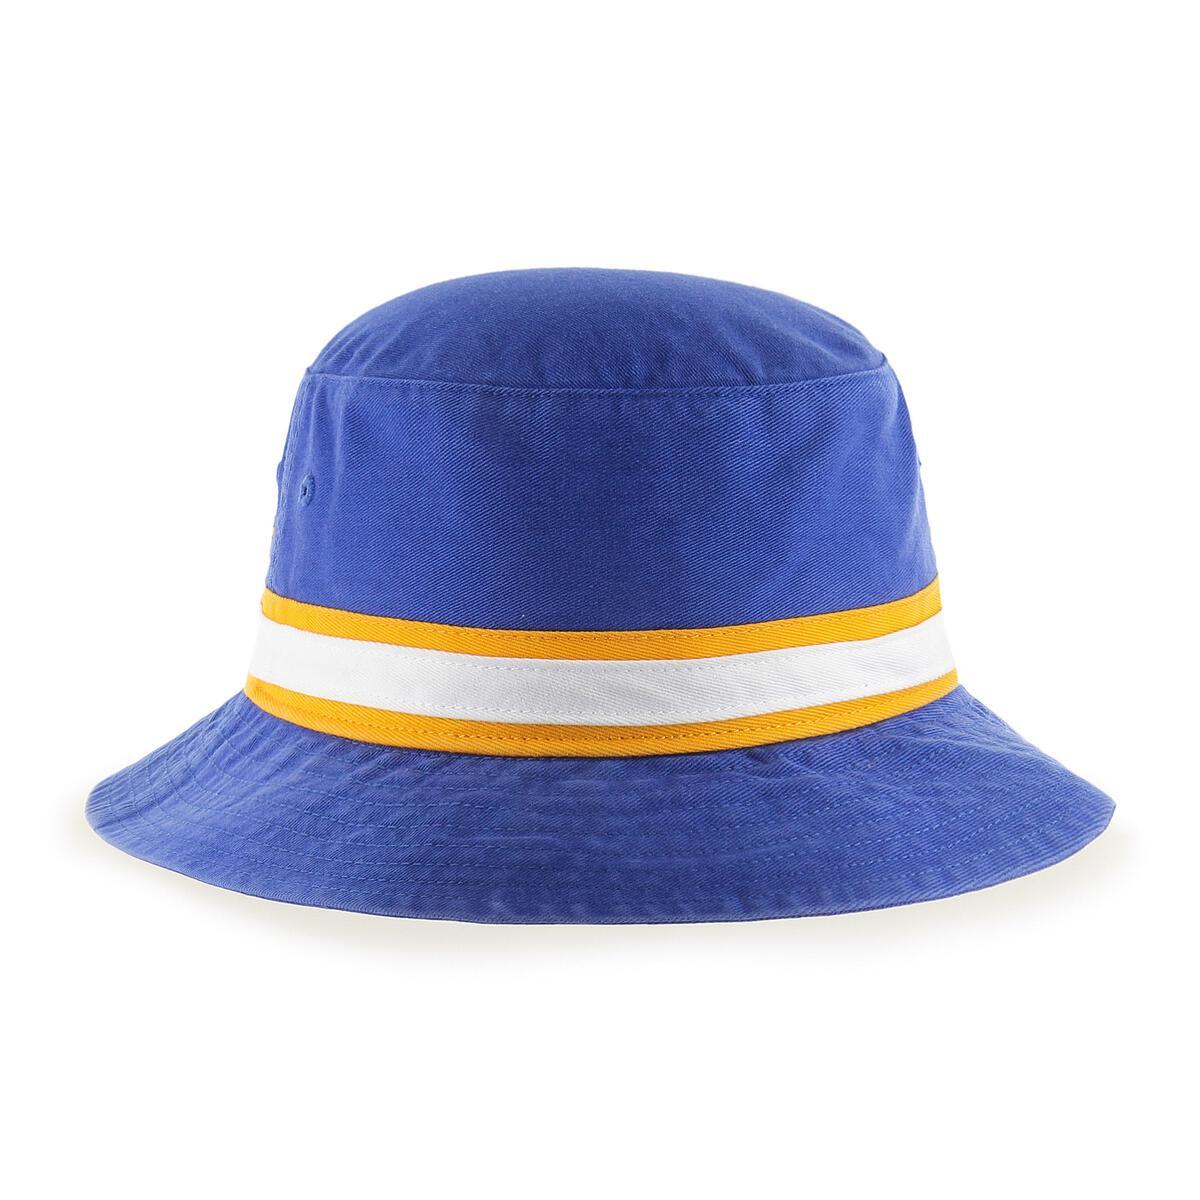 Parramatta Eels NRL '47 Striped Bucket Hat/Cap!